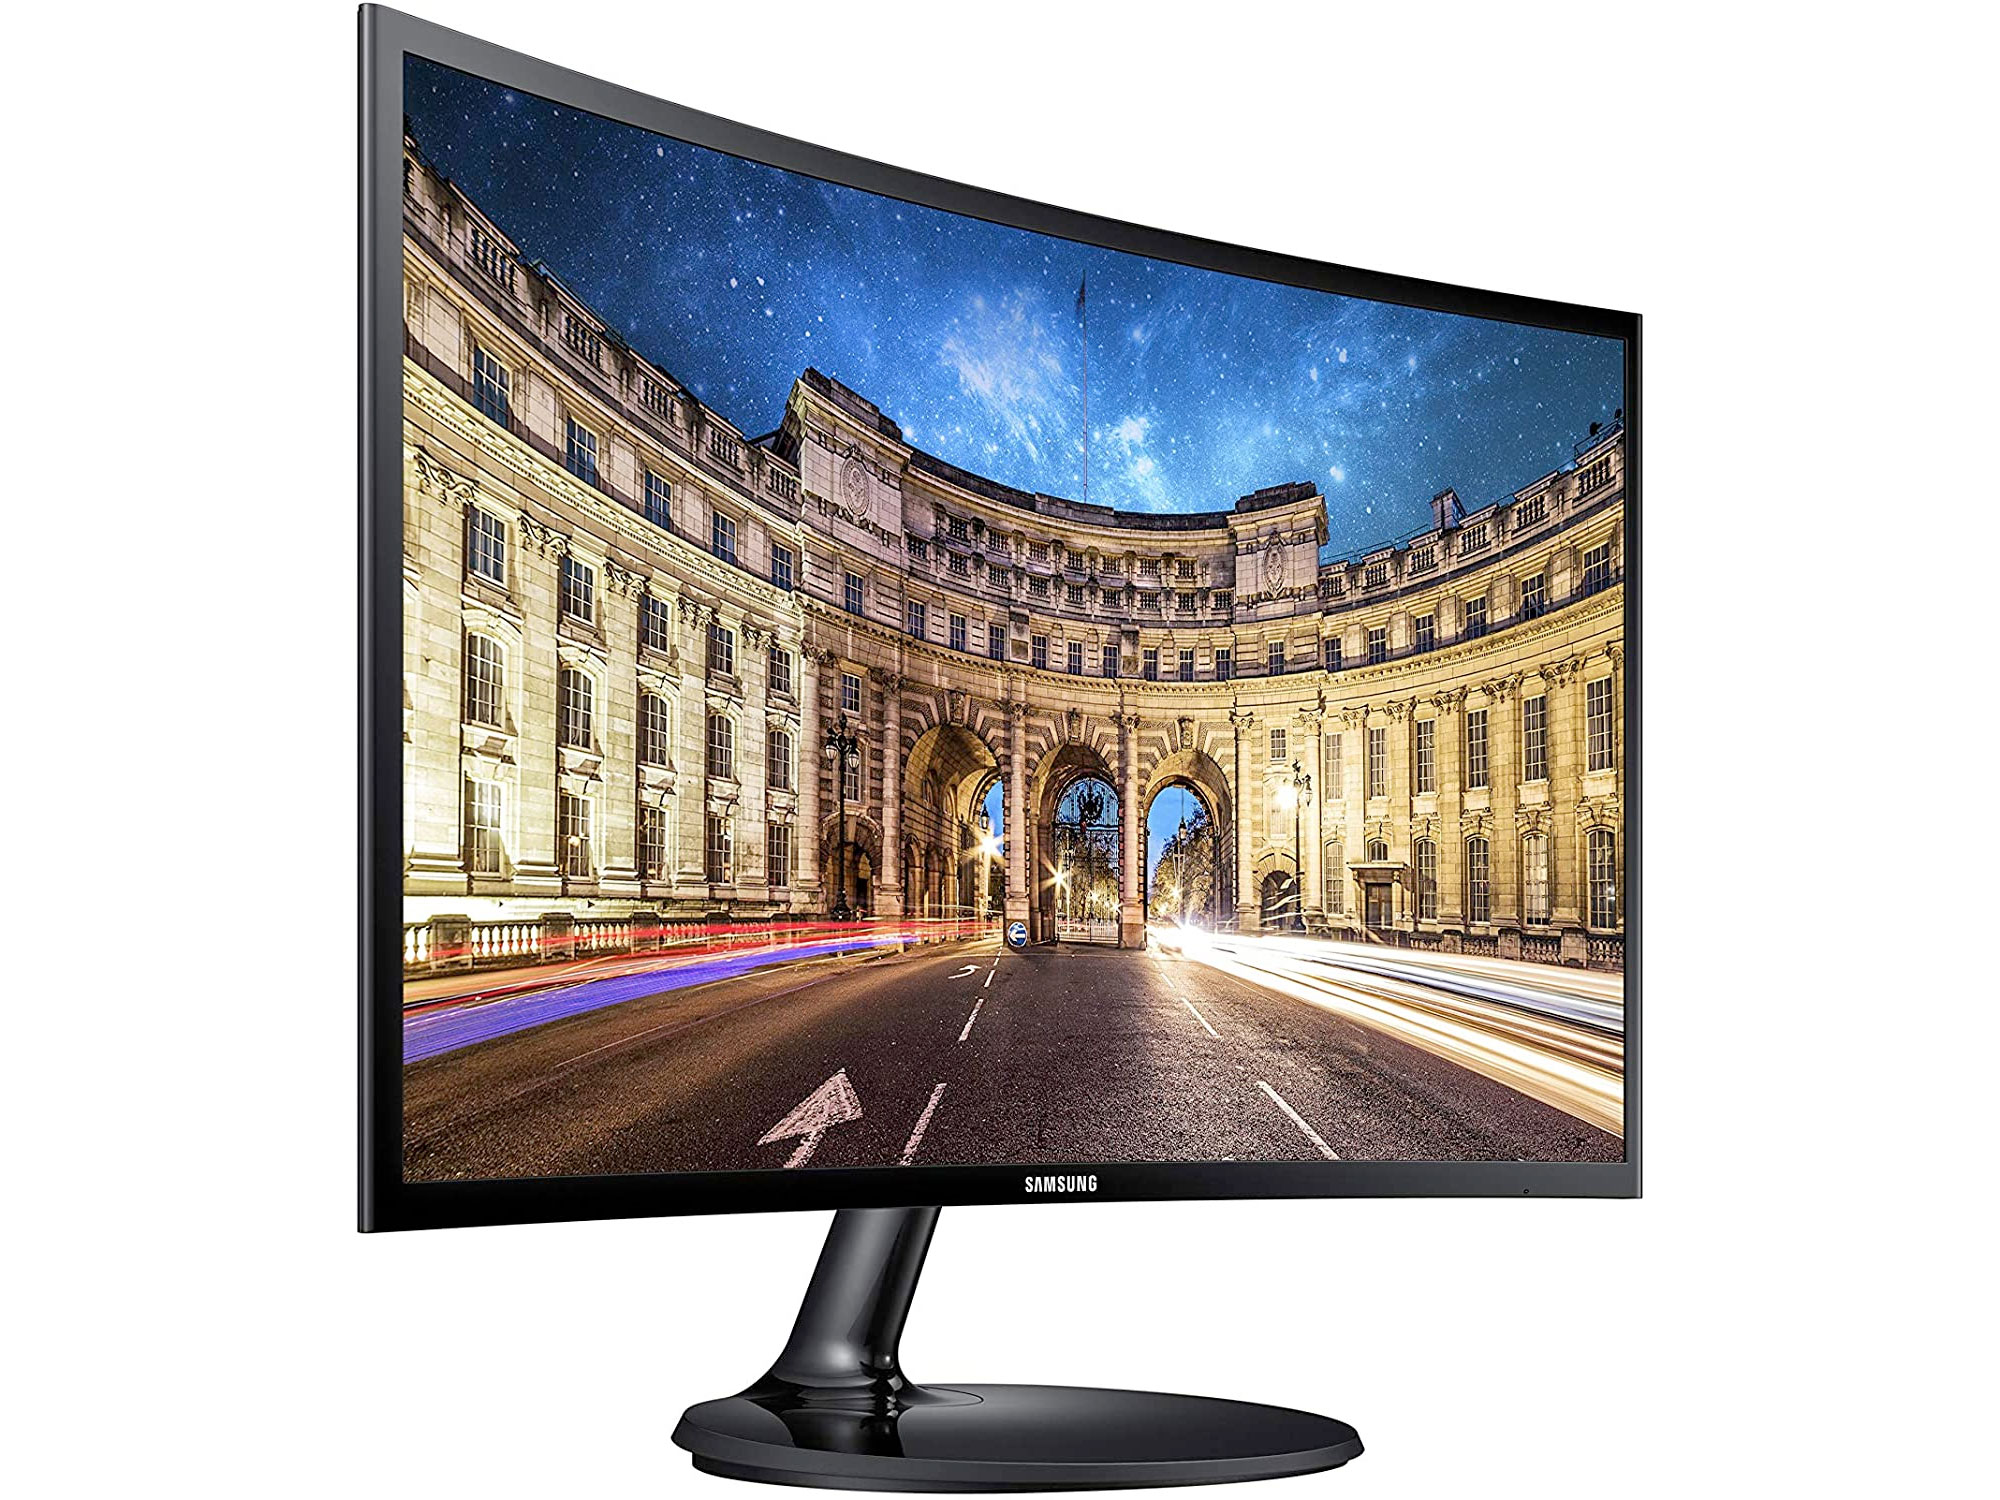 Amazon：Samsung LED 24吋全高清(Full HD)曲面電腦顯示屏 (curved monitor)只賣$147.99